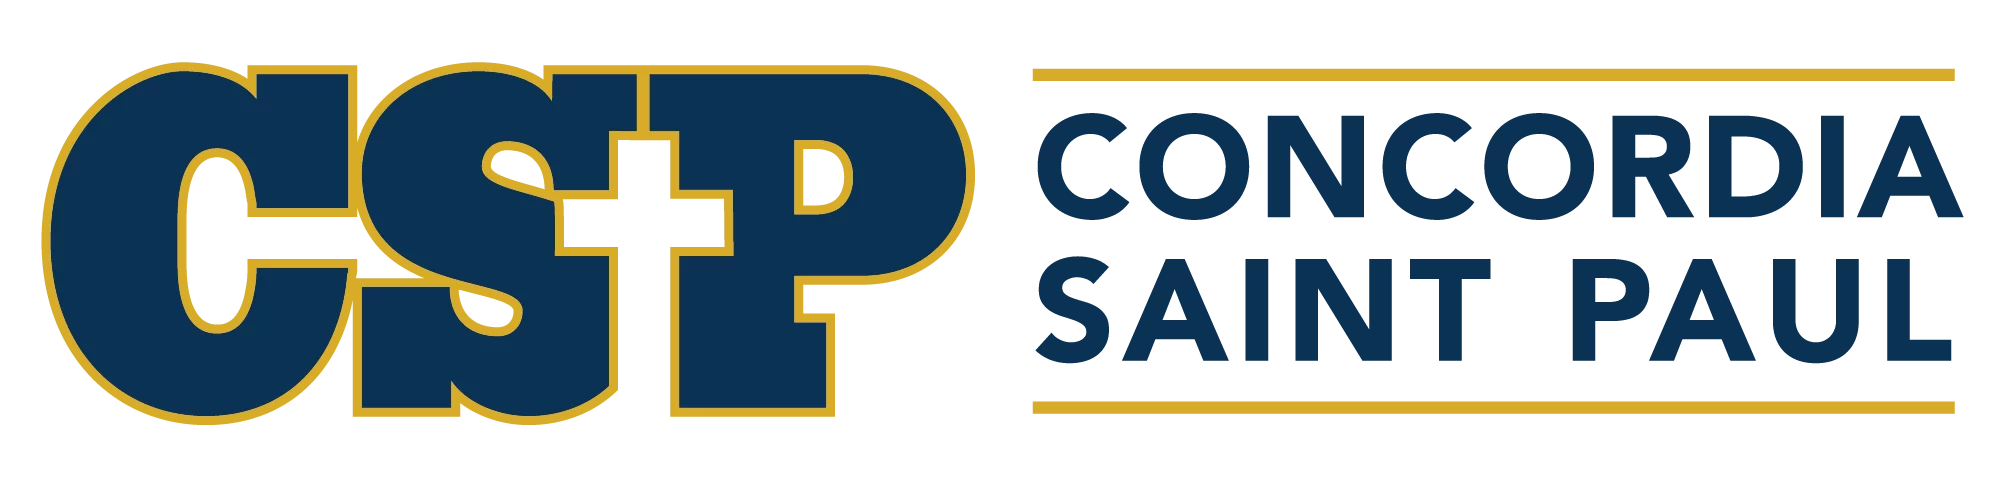 Concordia University, St. Paul - Profile, Rankings and Data